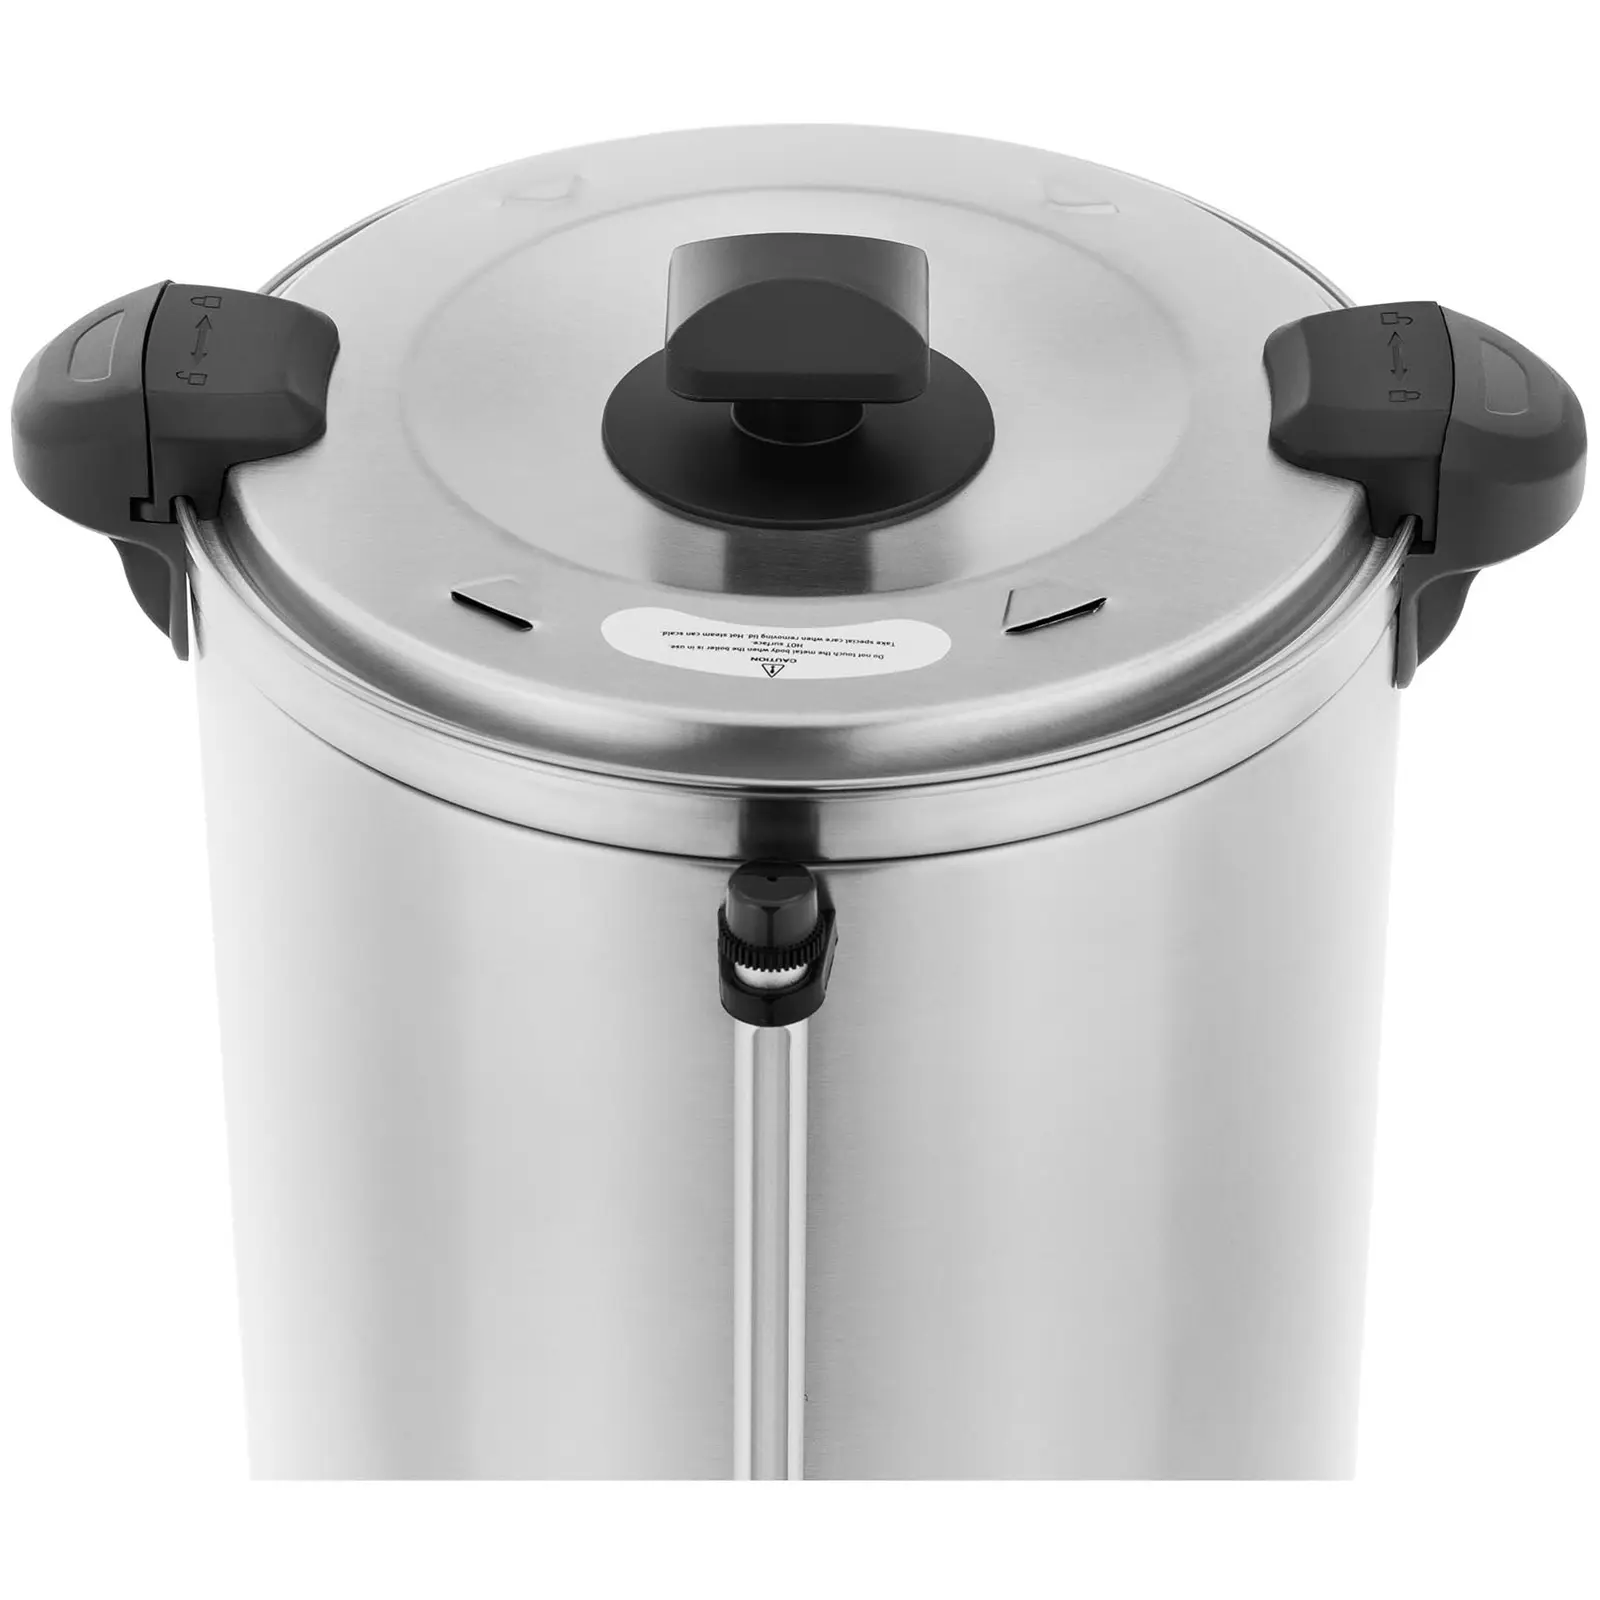 Hot water dispenser - 19.7 L - 2500 W - Drip Tray - Silver